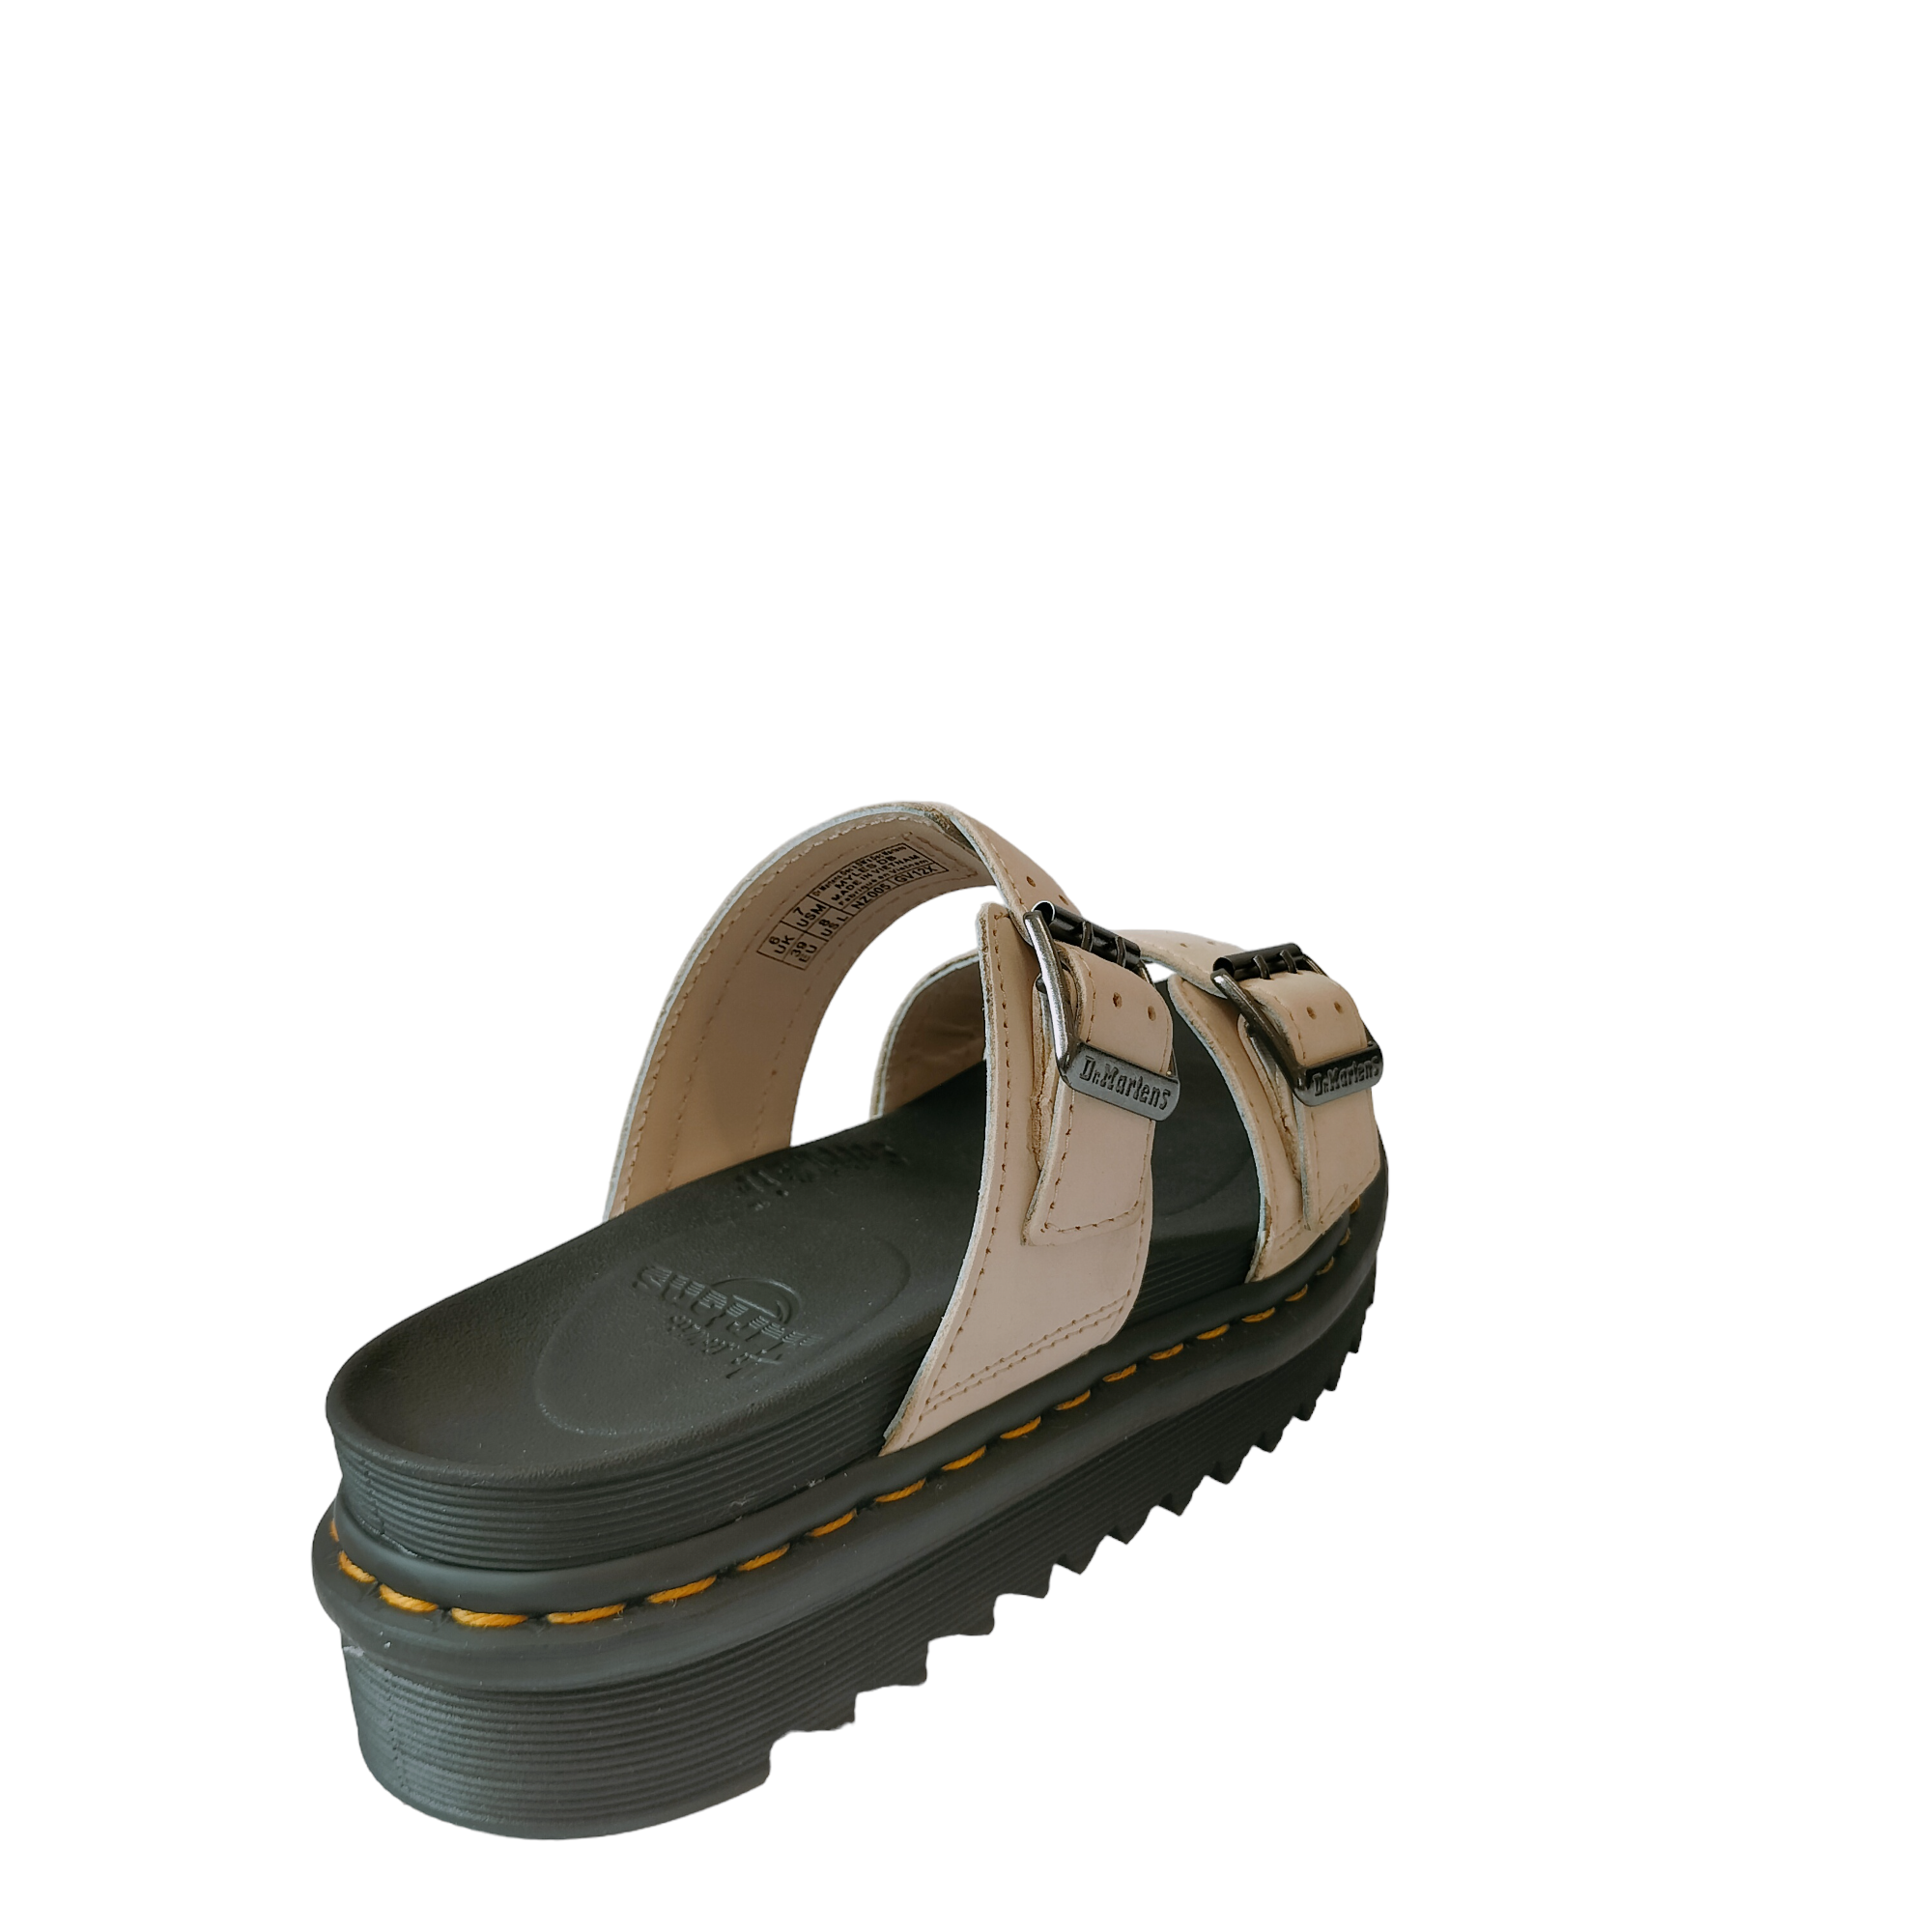 Myles Slide - shoe&amp;me - Dr. Martens - Sandal - Sandals, Slide, Summer, Unisex, Womens